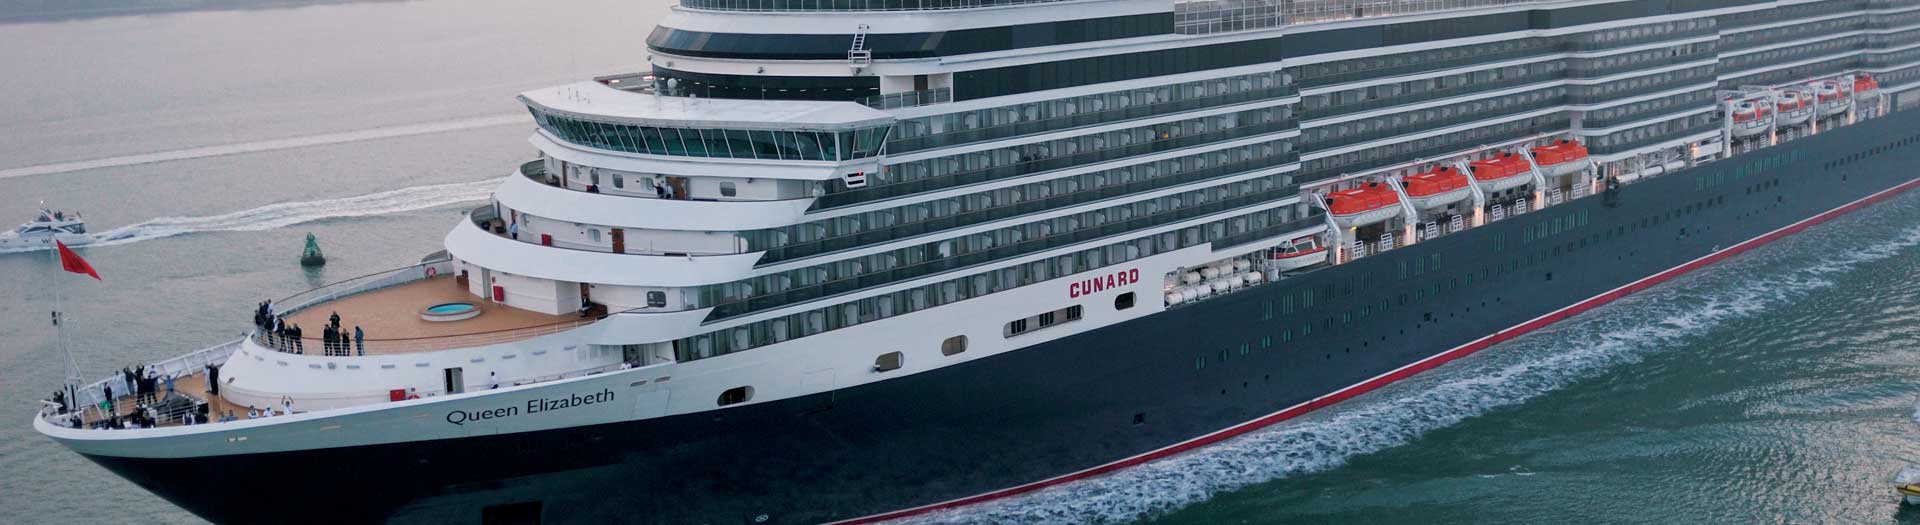 Curnard Cruise Line